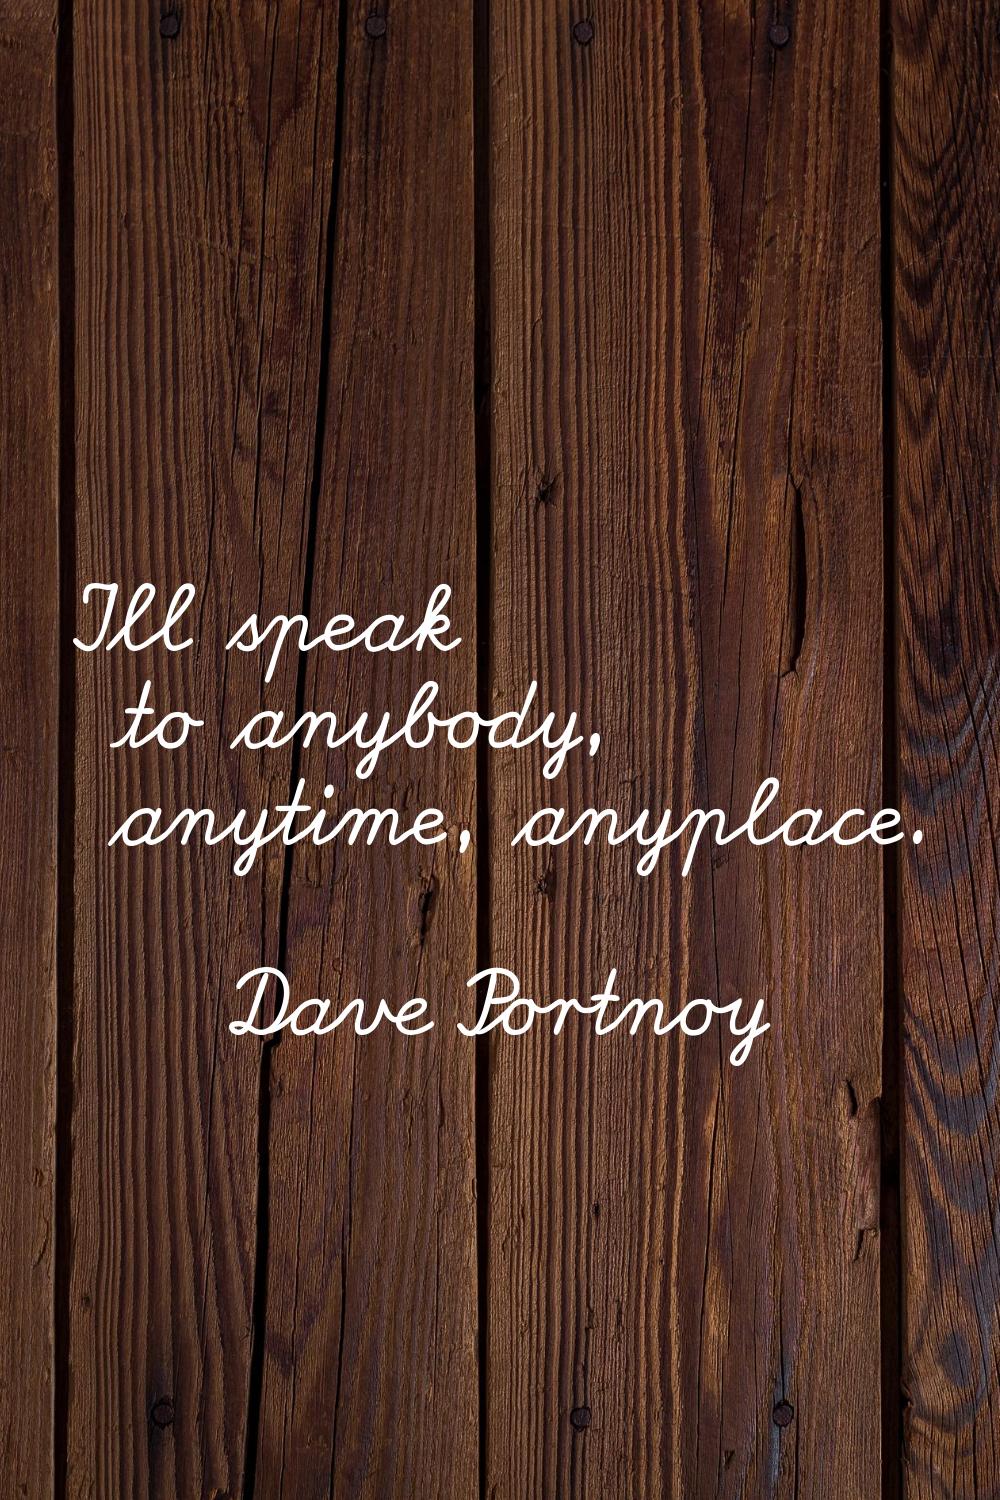 I'll speak to anybody, anytime, anyplace.